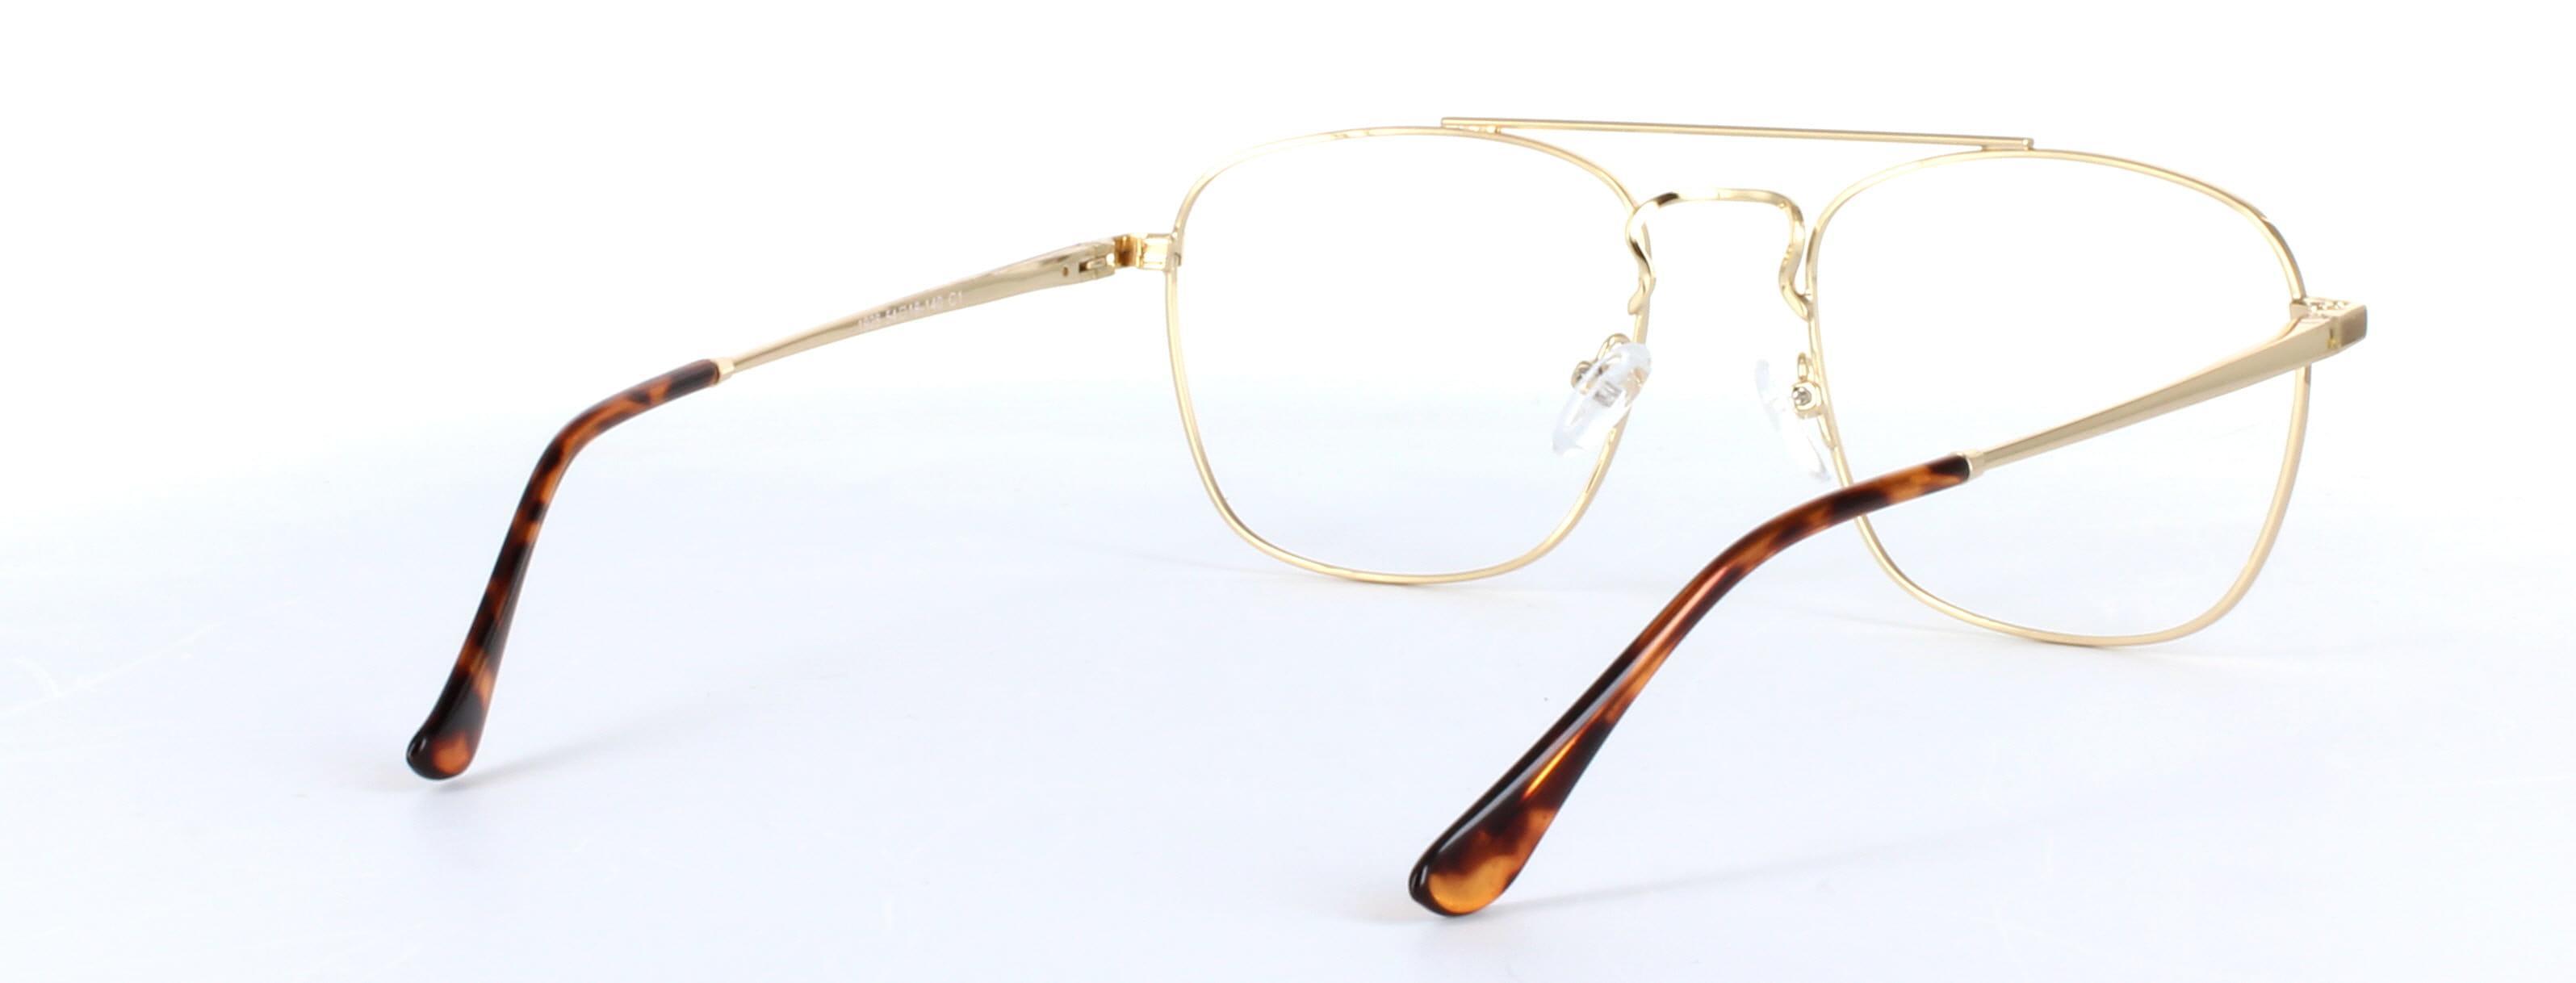 Enrique Gold Full Rim Aviator Metal Glasses - Image View 4